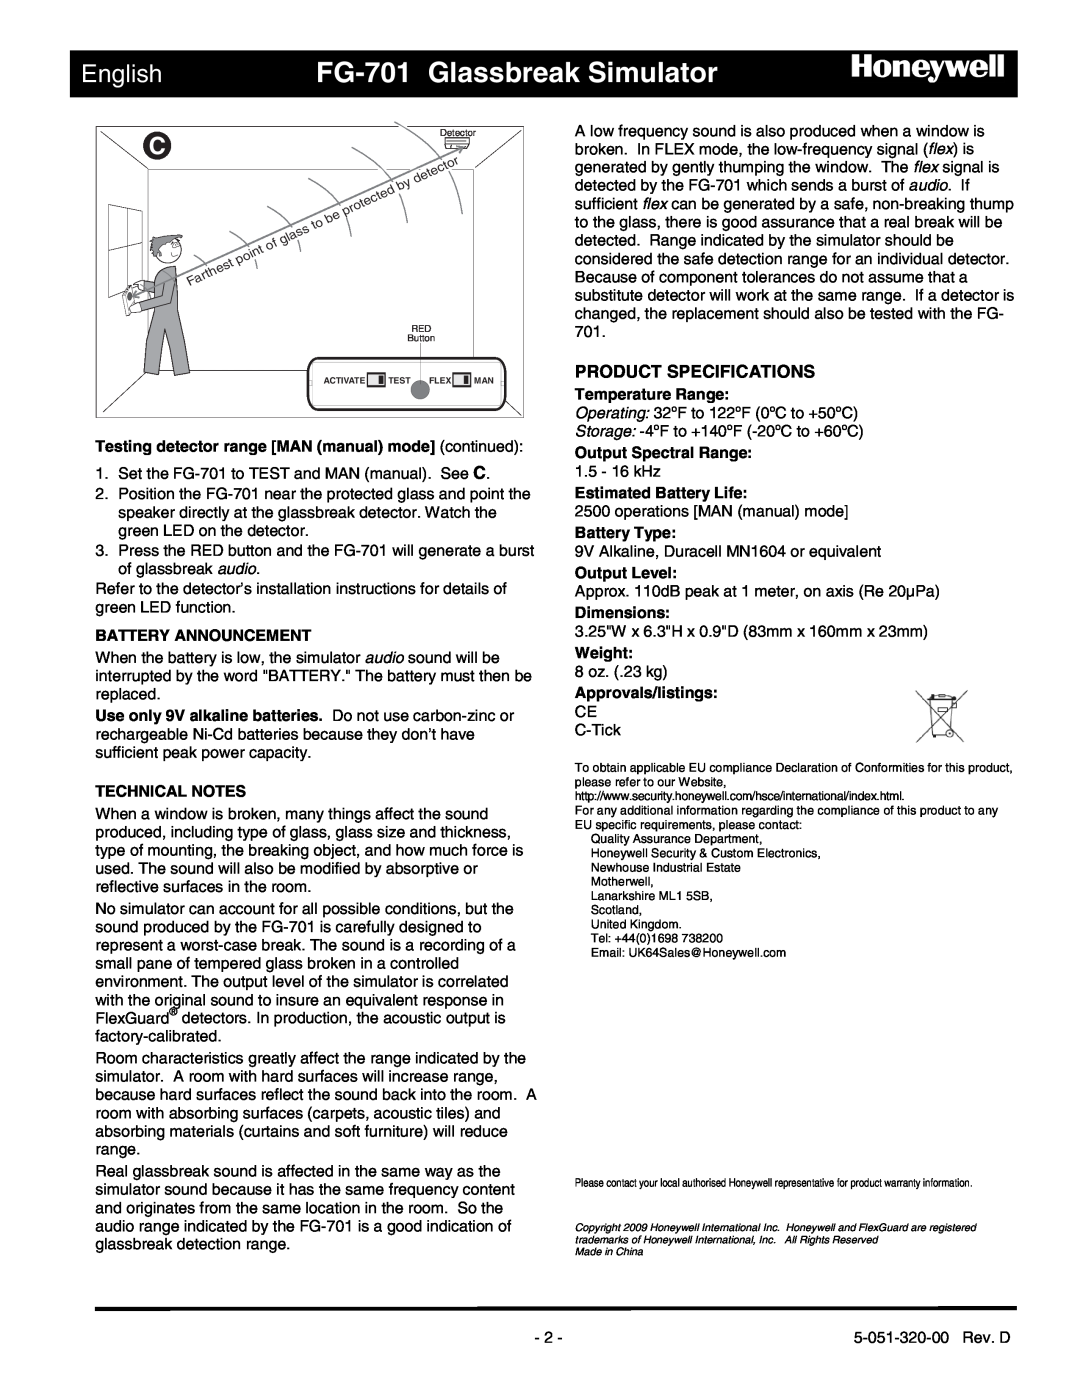 Honeywell operating instructions Product Specifications, FG-701 Glassbreak Simulator, English 